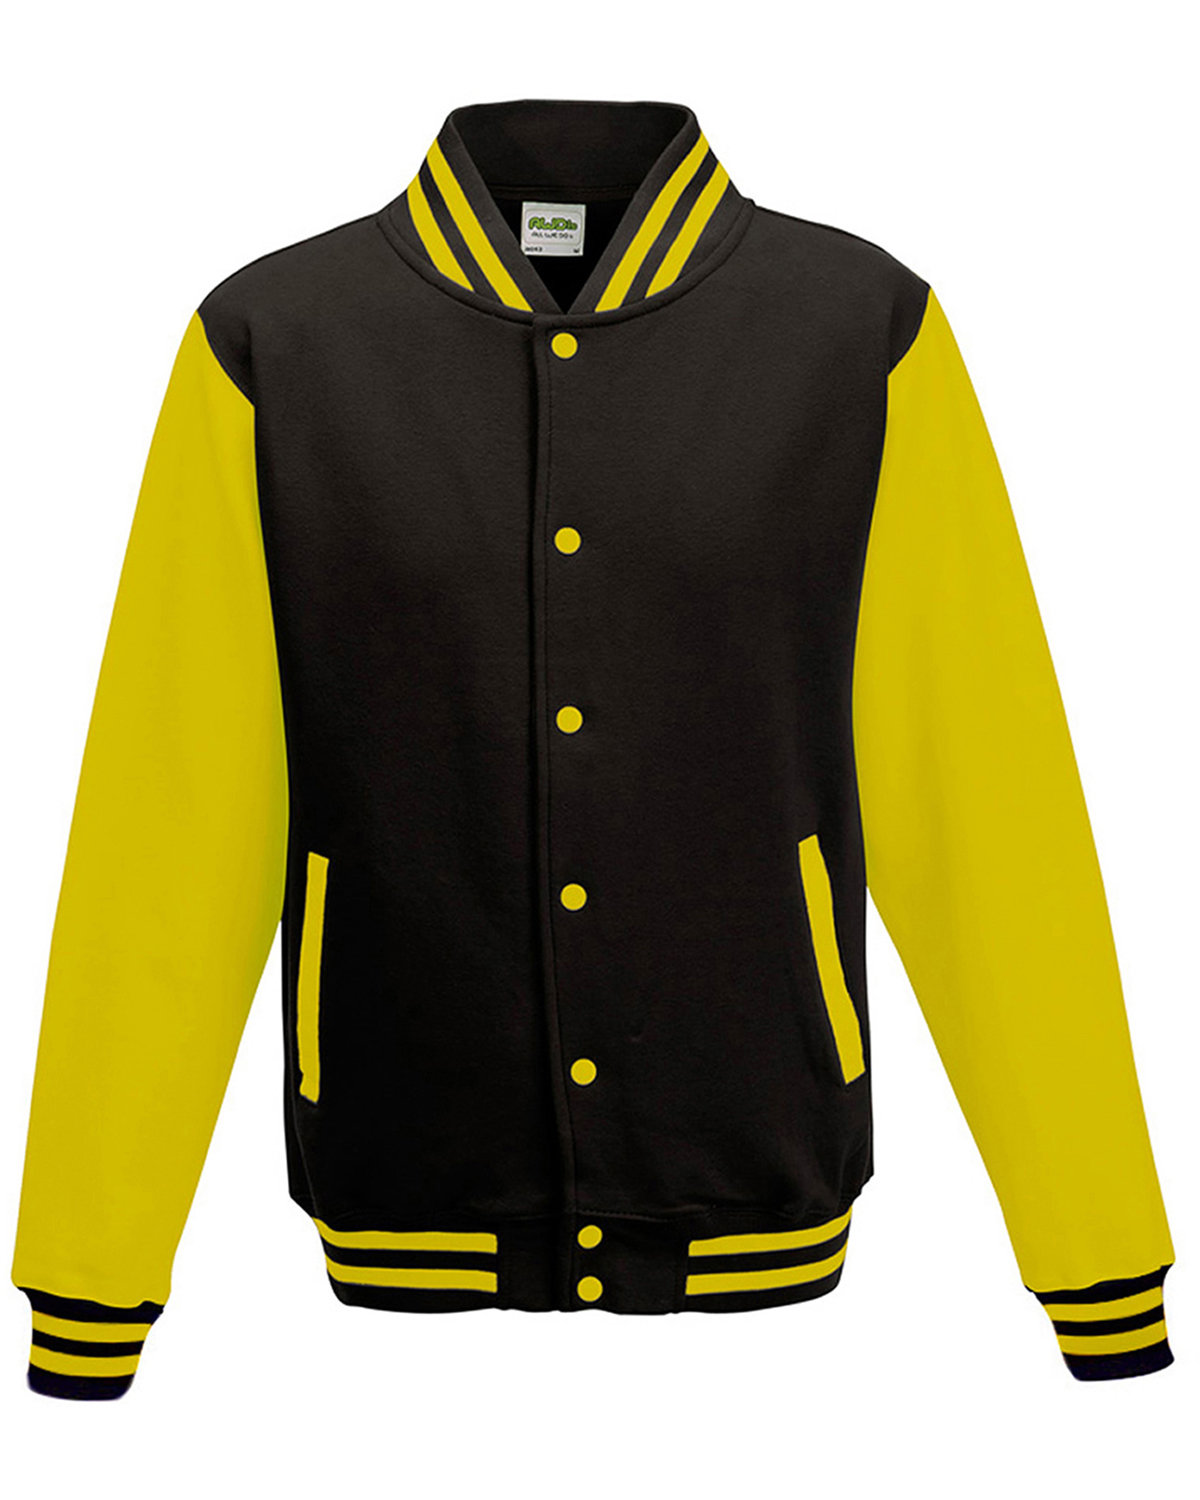 Norf Varsity Jacket (Yellow, Black)